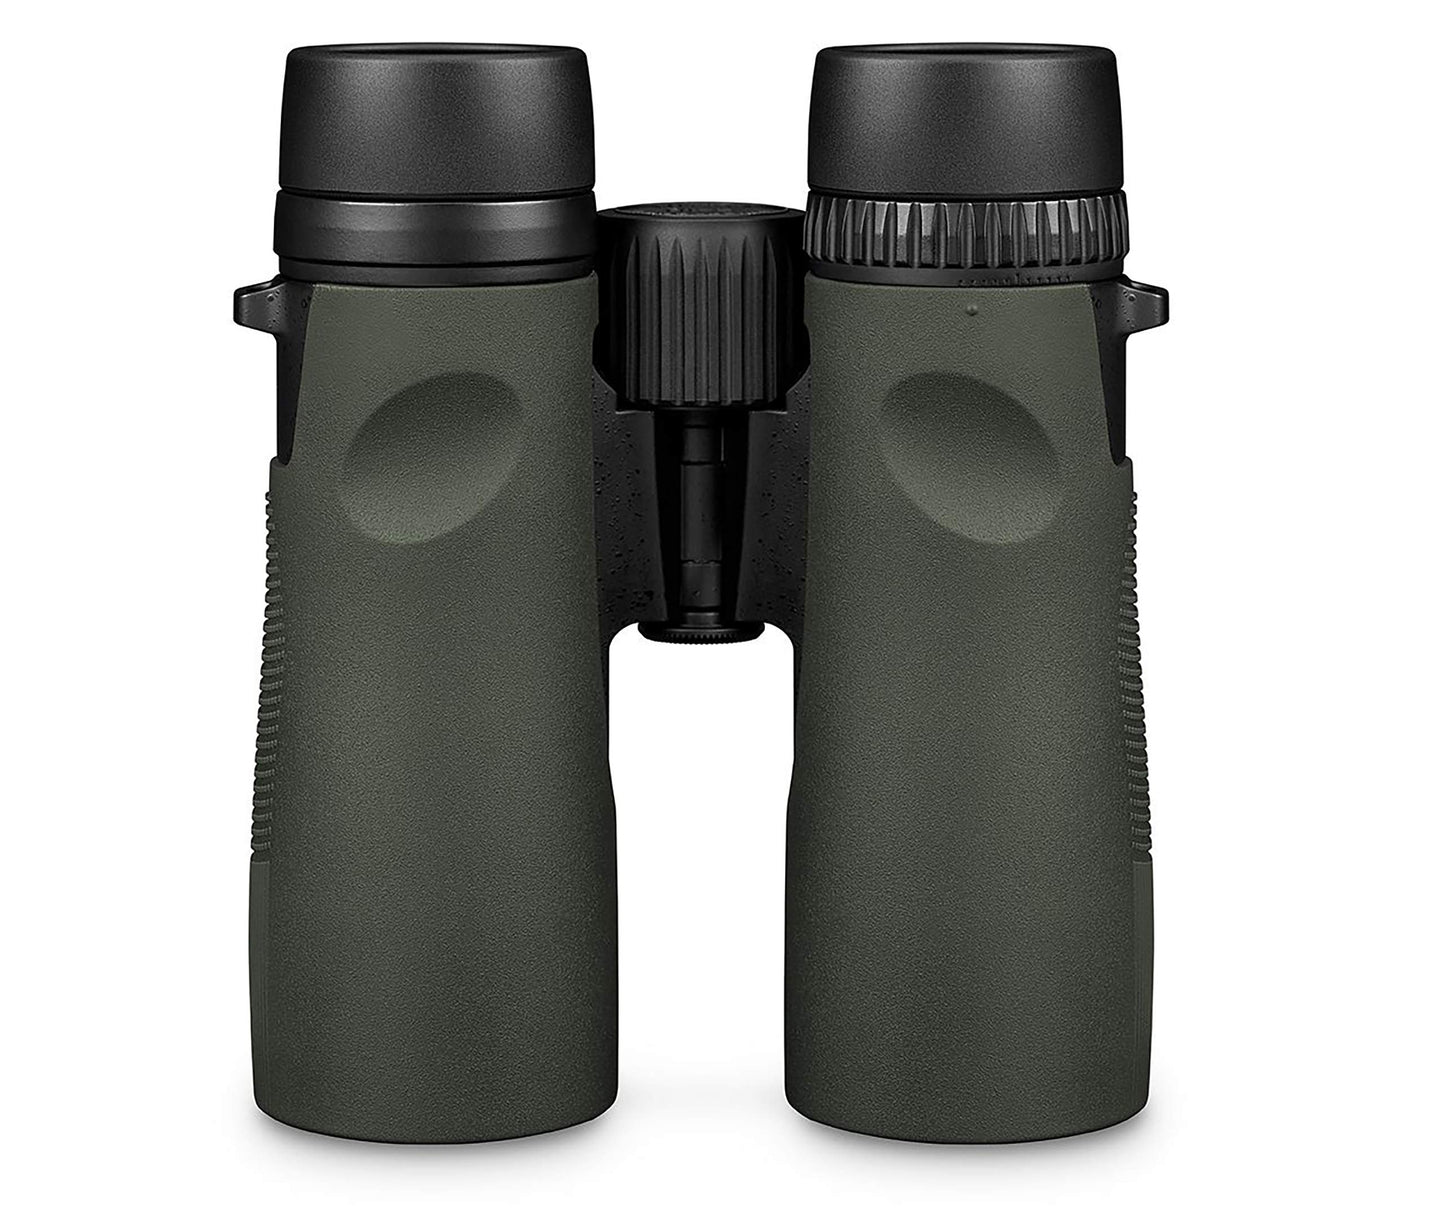 Vortex Optics Diamondback HD Binoculars - DB-215